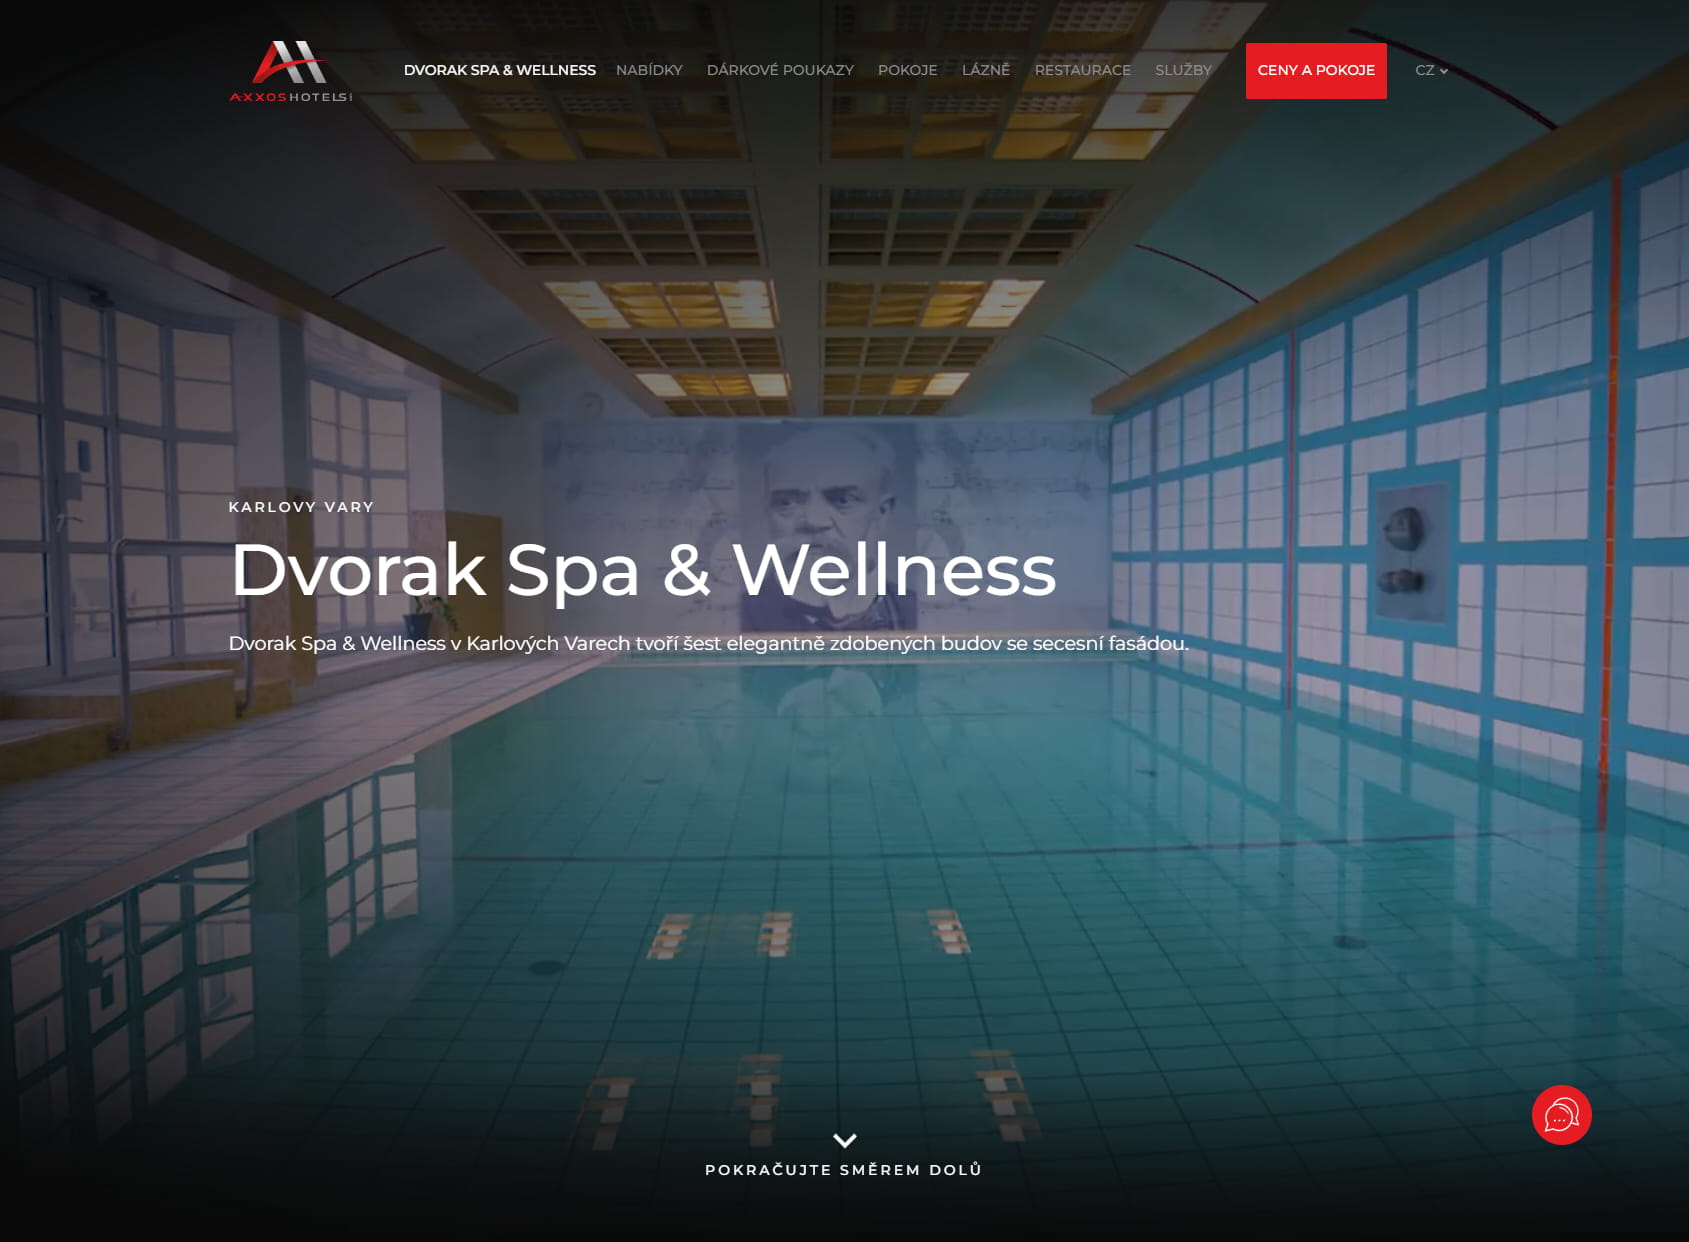 Dvorak Spa & Wellness hotel Karlovy Vary by Axxos Hotels